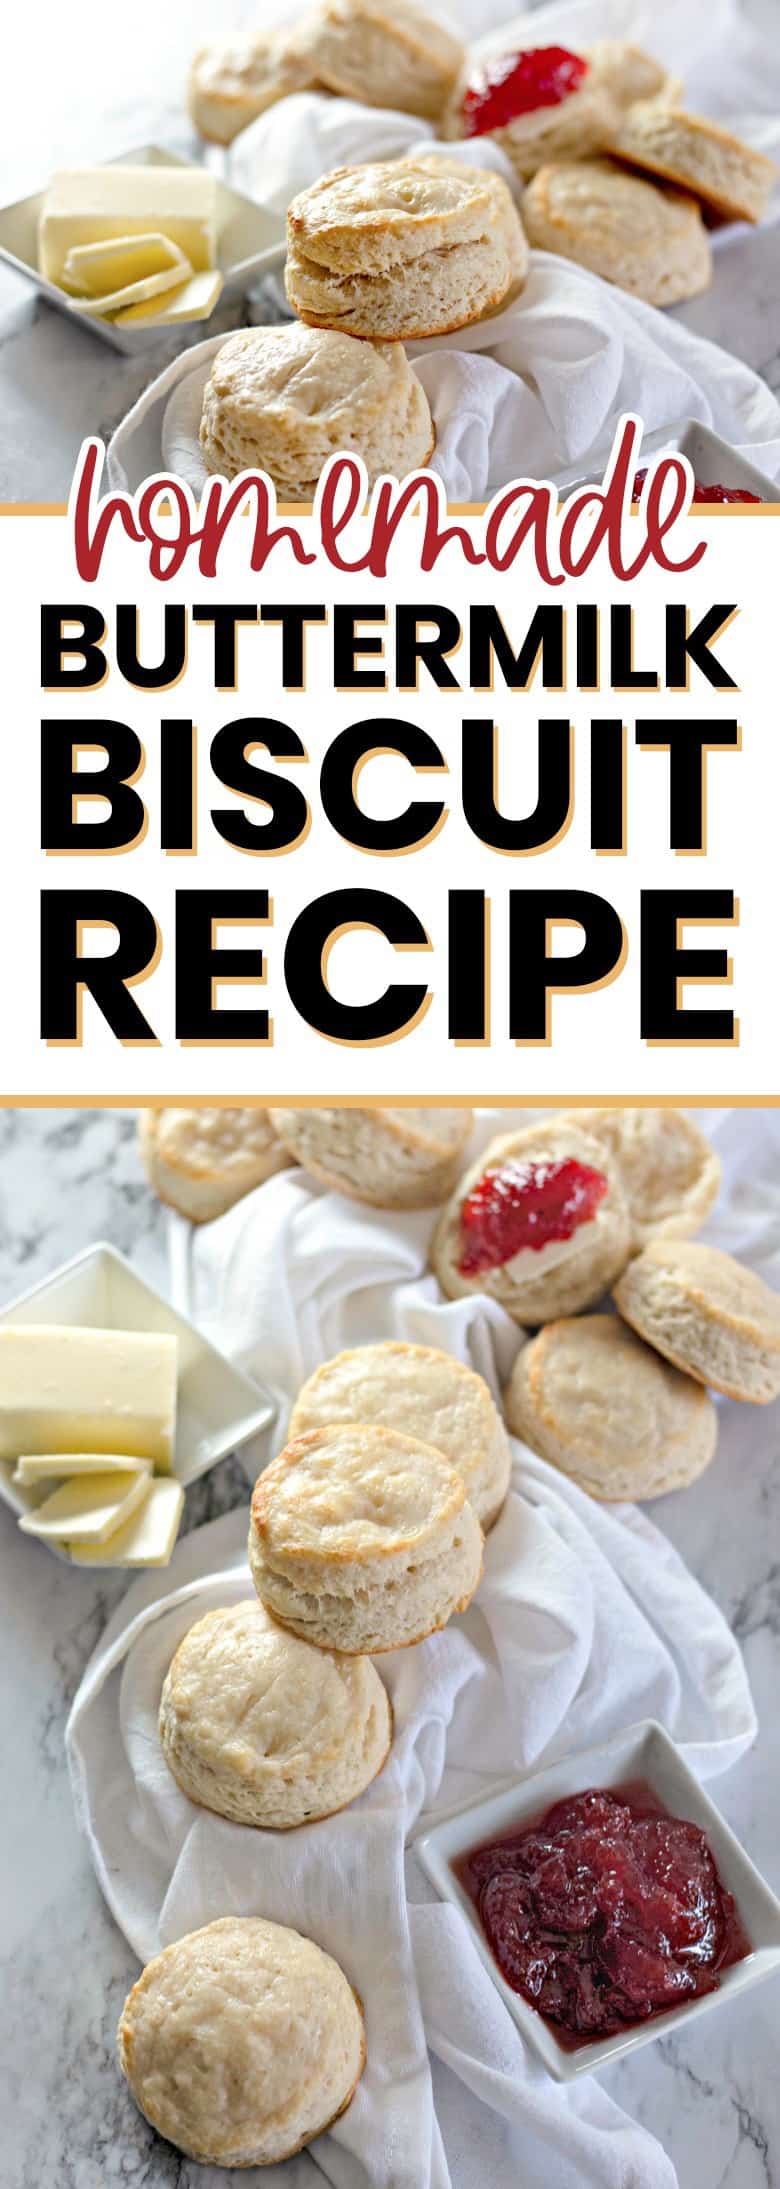 buttermilk biscuits pinterest image